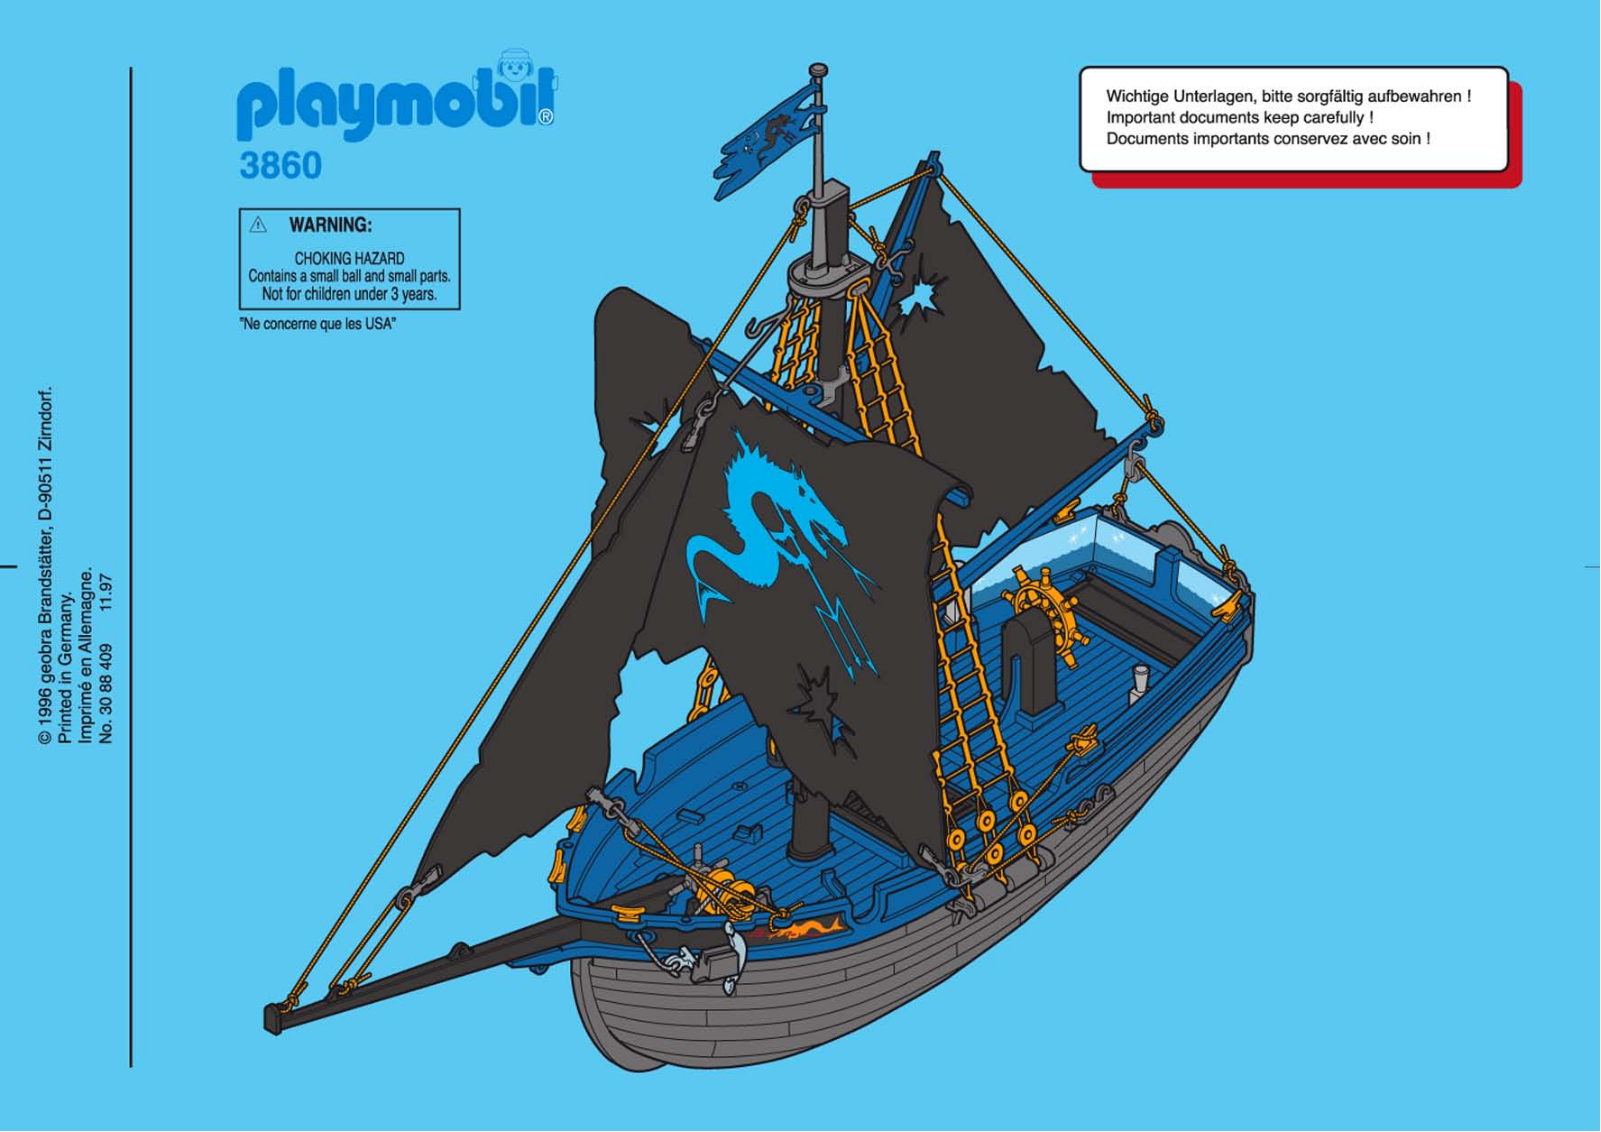 Playmobil 3860 Instructions